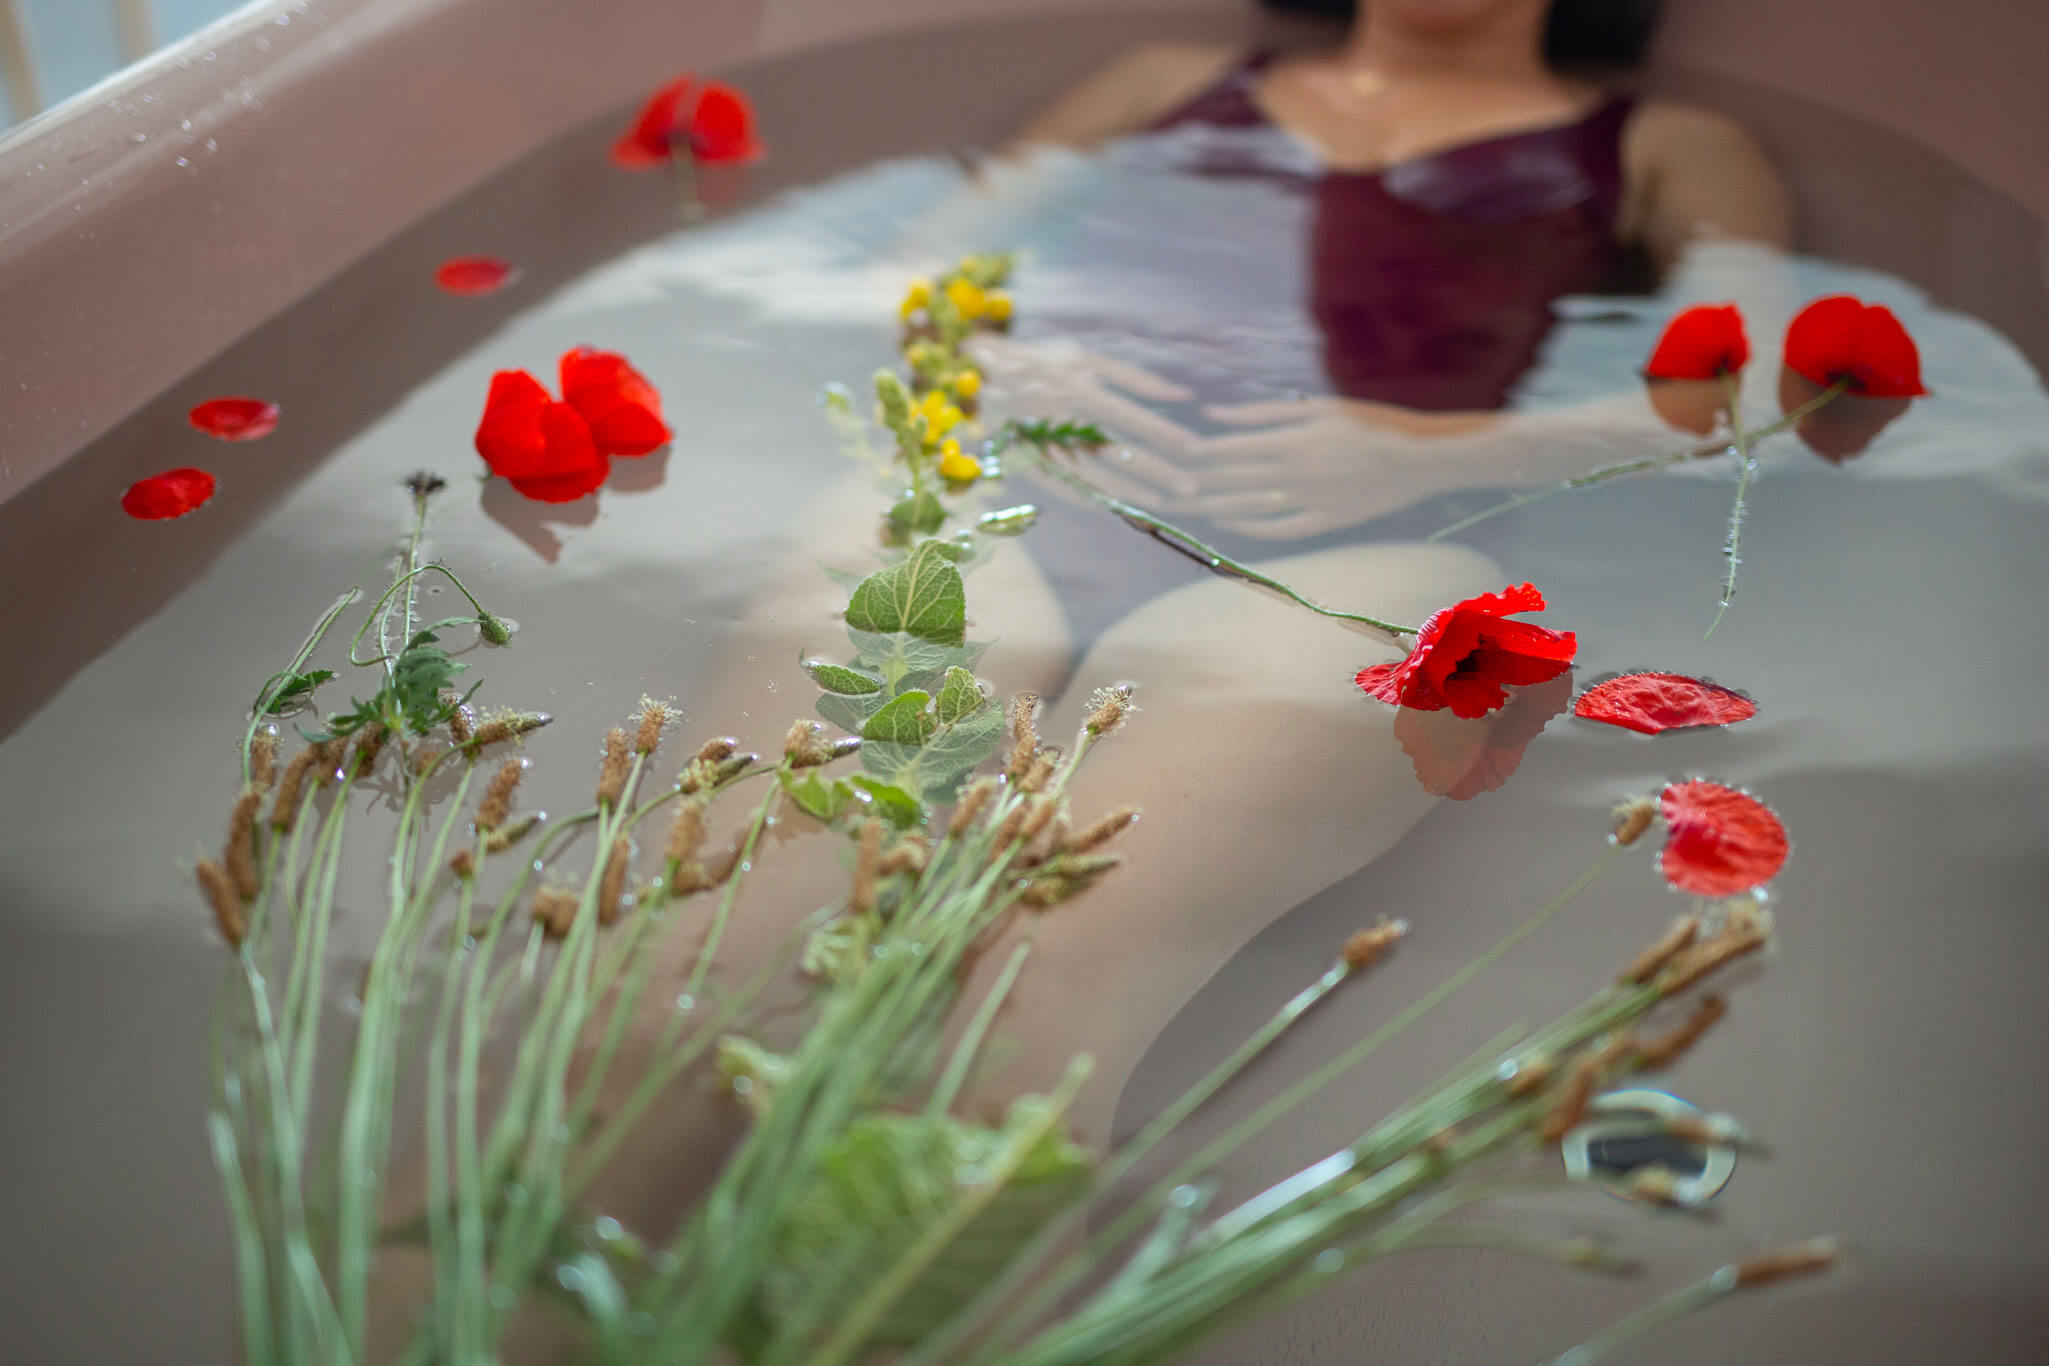 A bath with flowers.